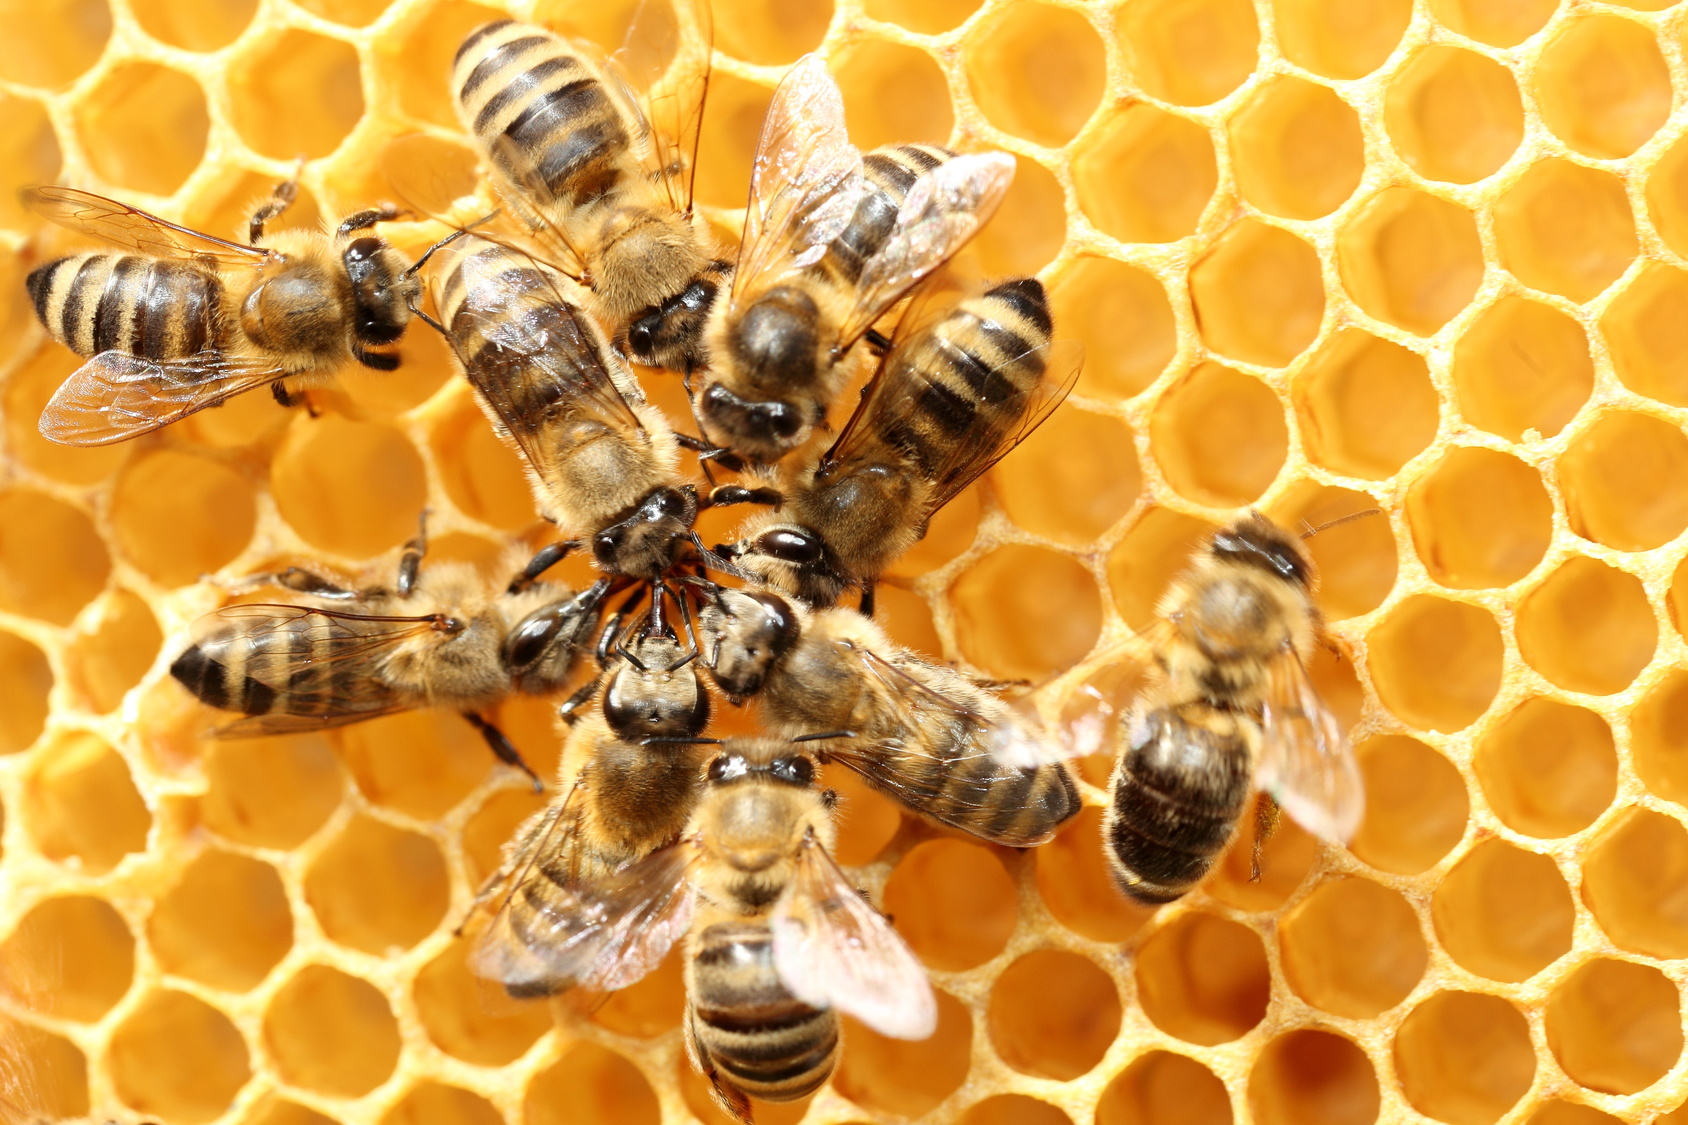 pszczoly ul pasieka miut miod - Fotolia